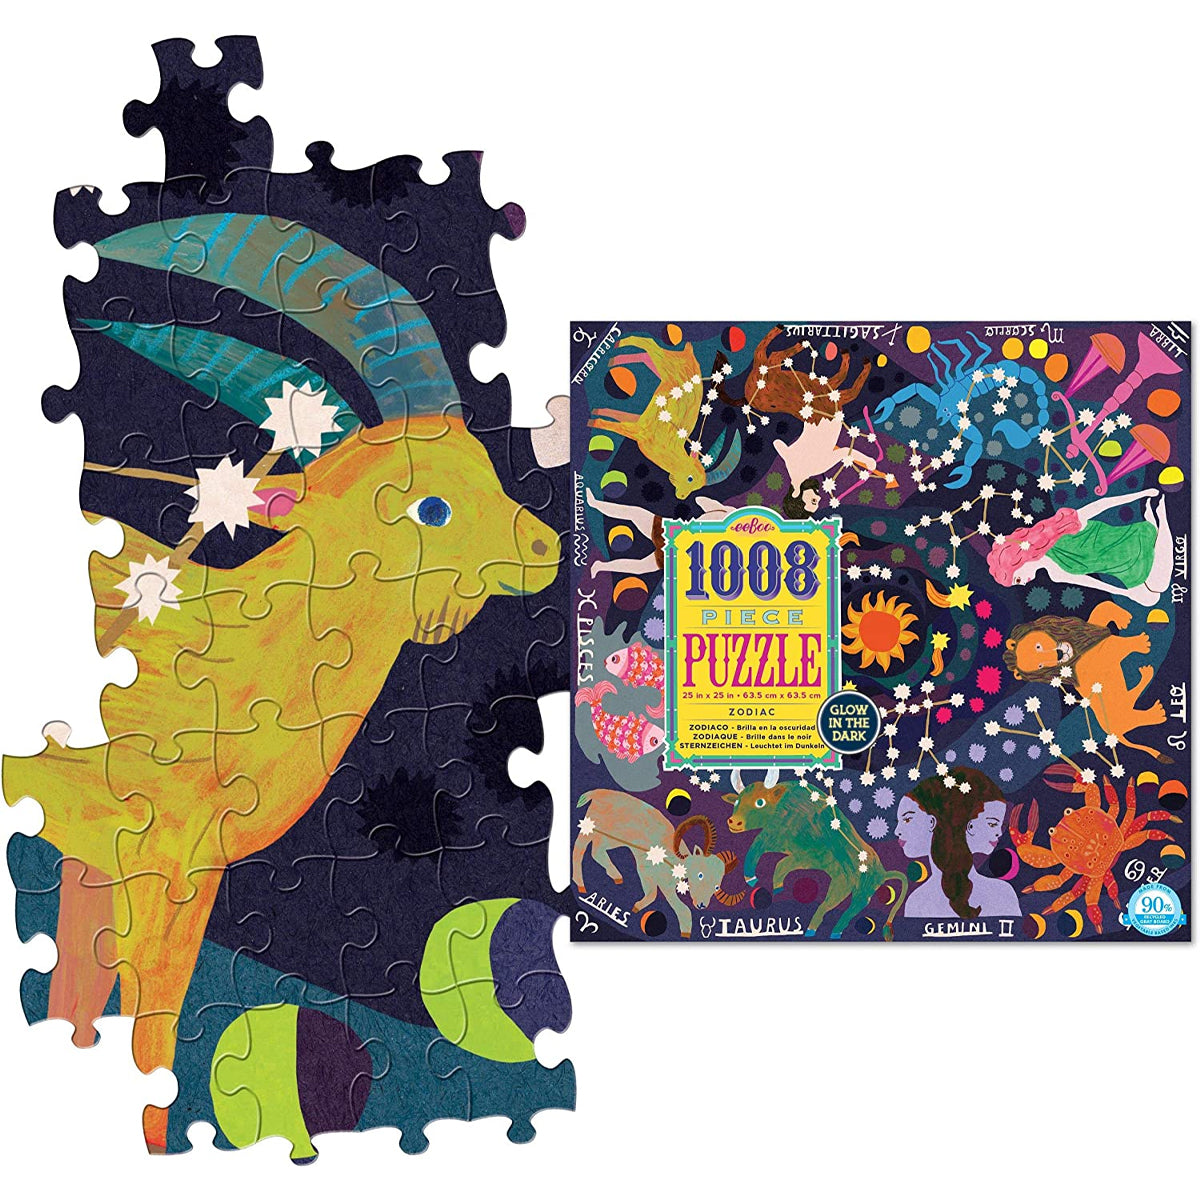 eeBoo 1000pc Square Jigsaw Puzzle – Artist-Designed, Eco-Friendly